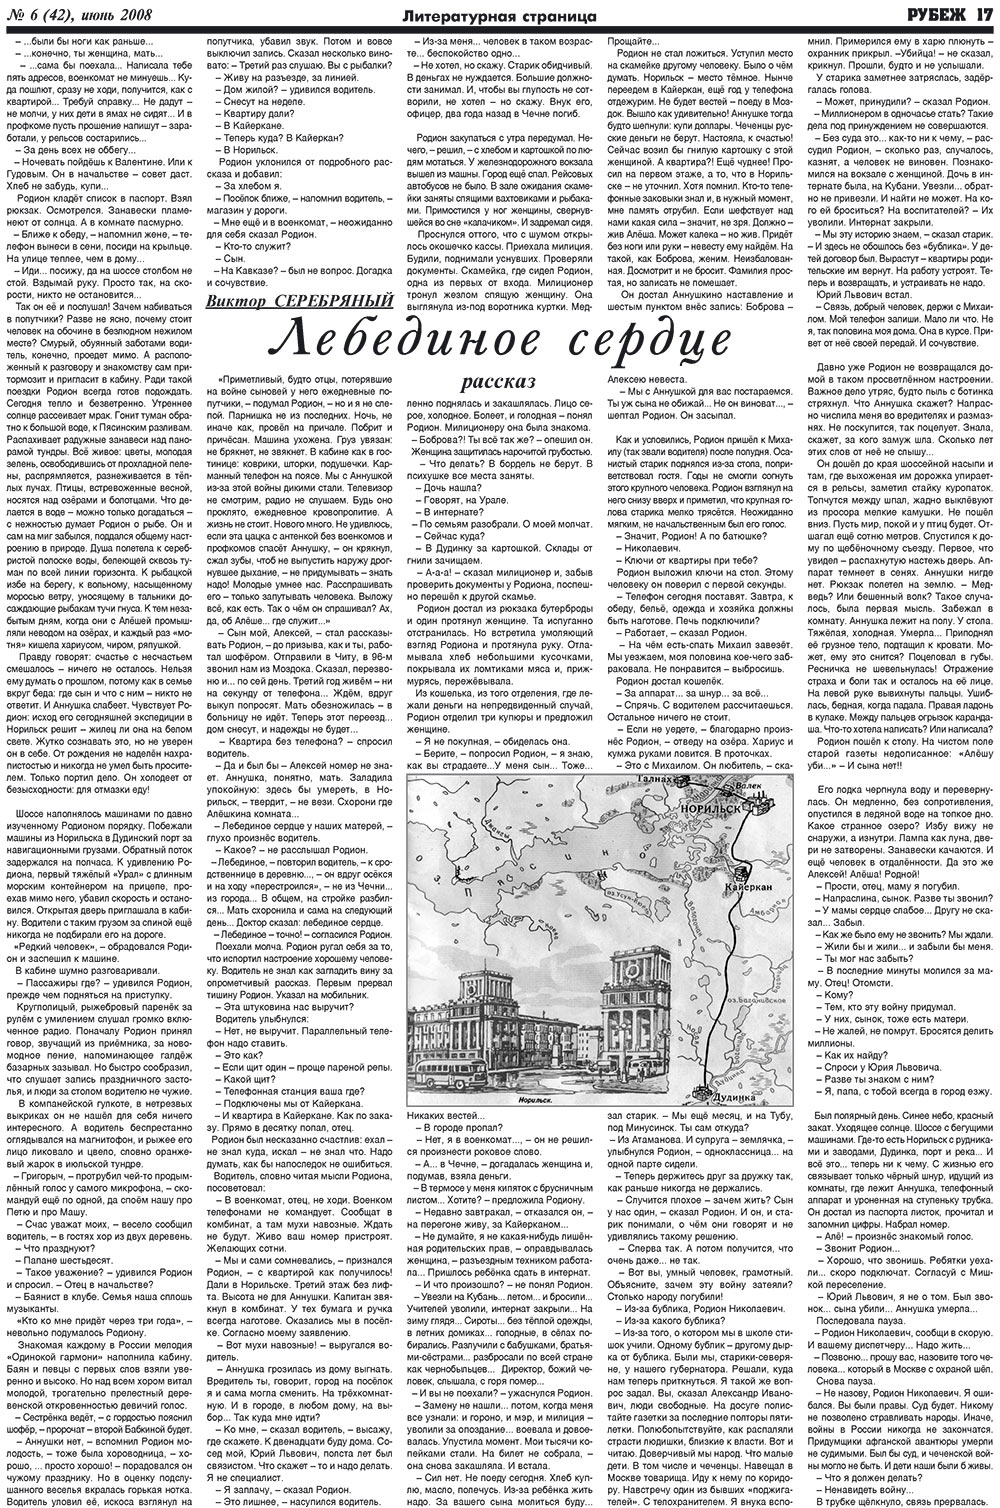 Рубеж, газета. 2008 №6 стр.17